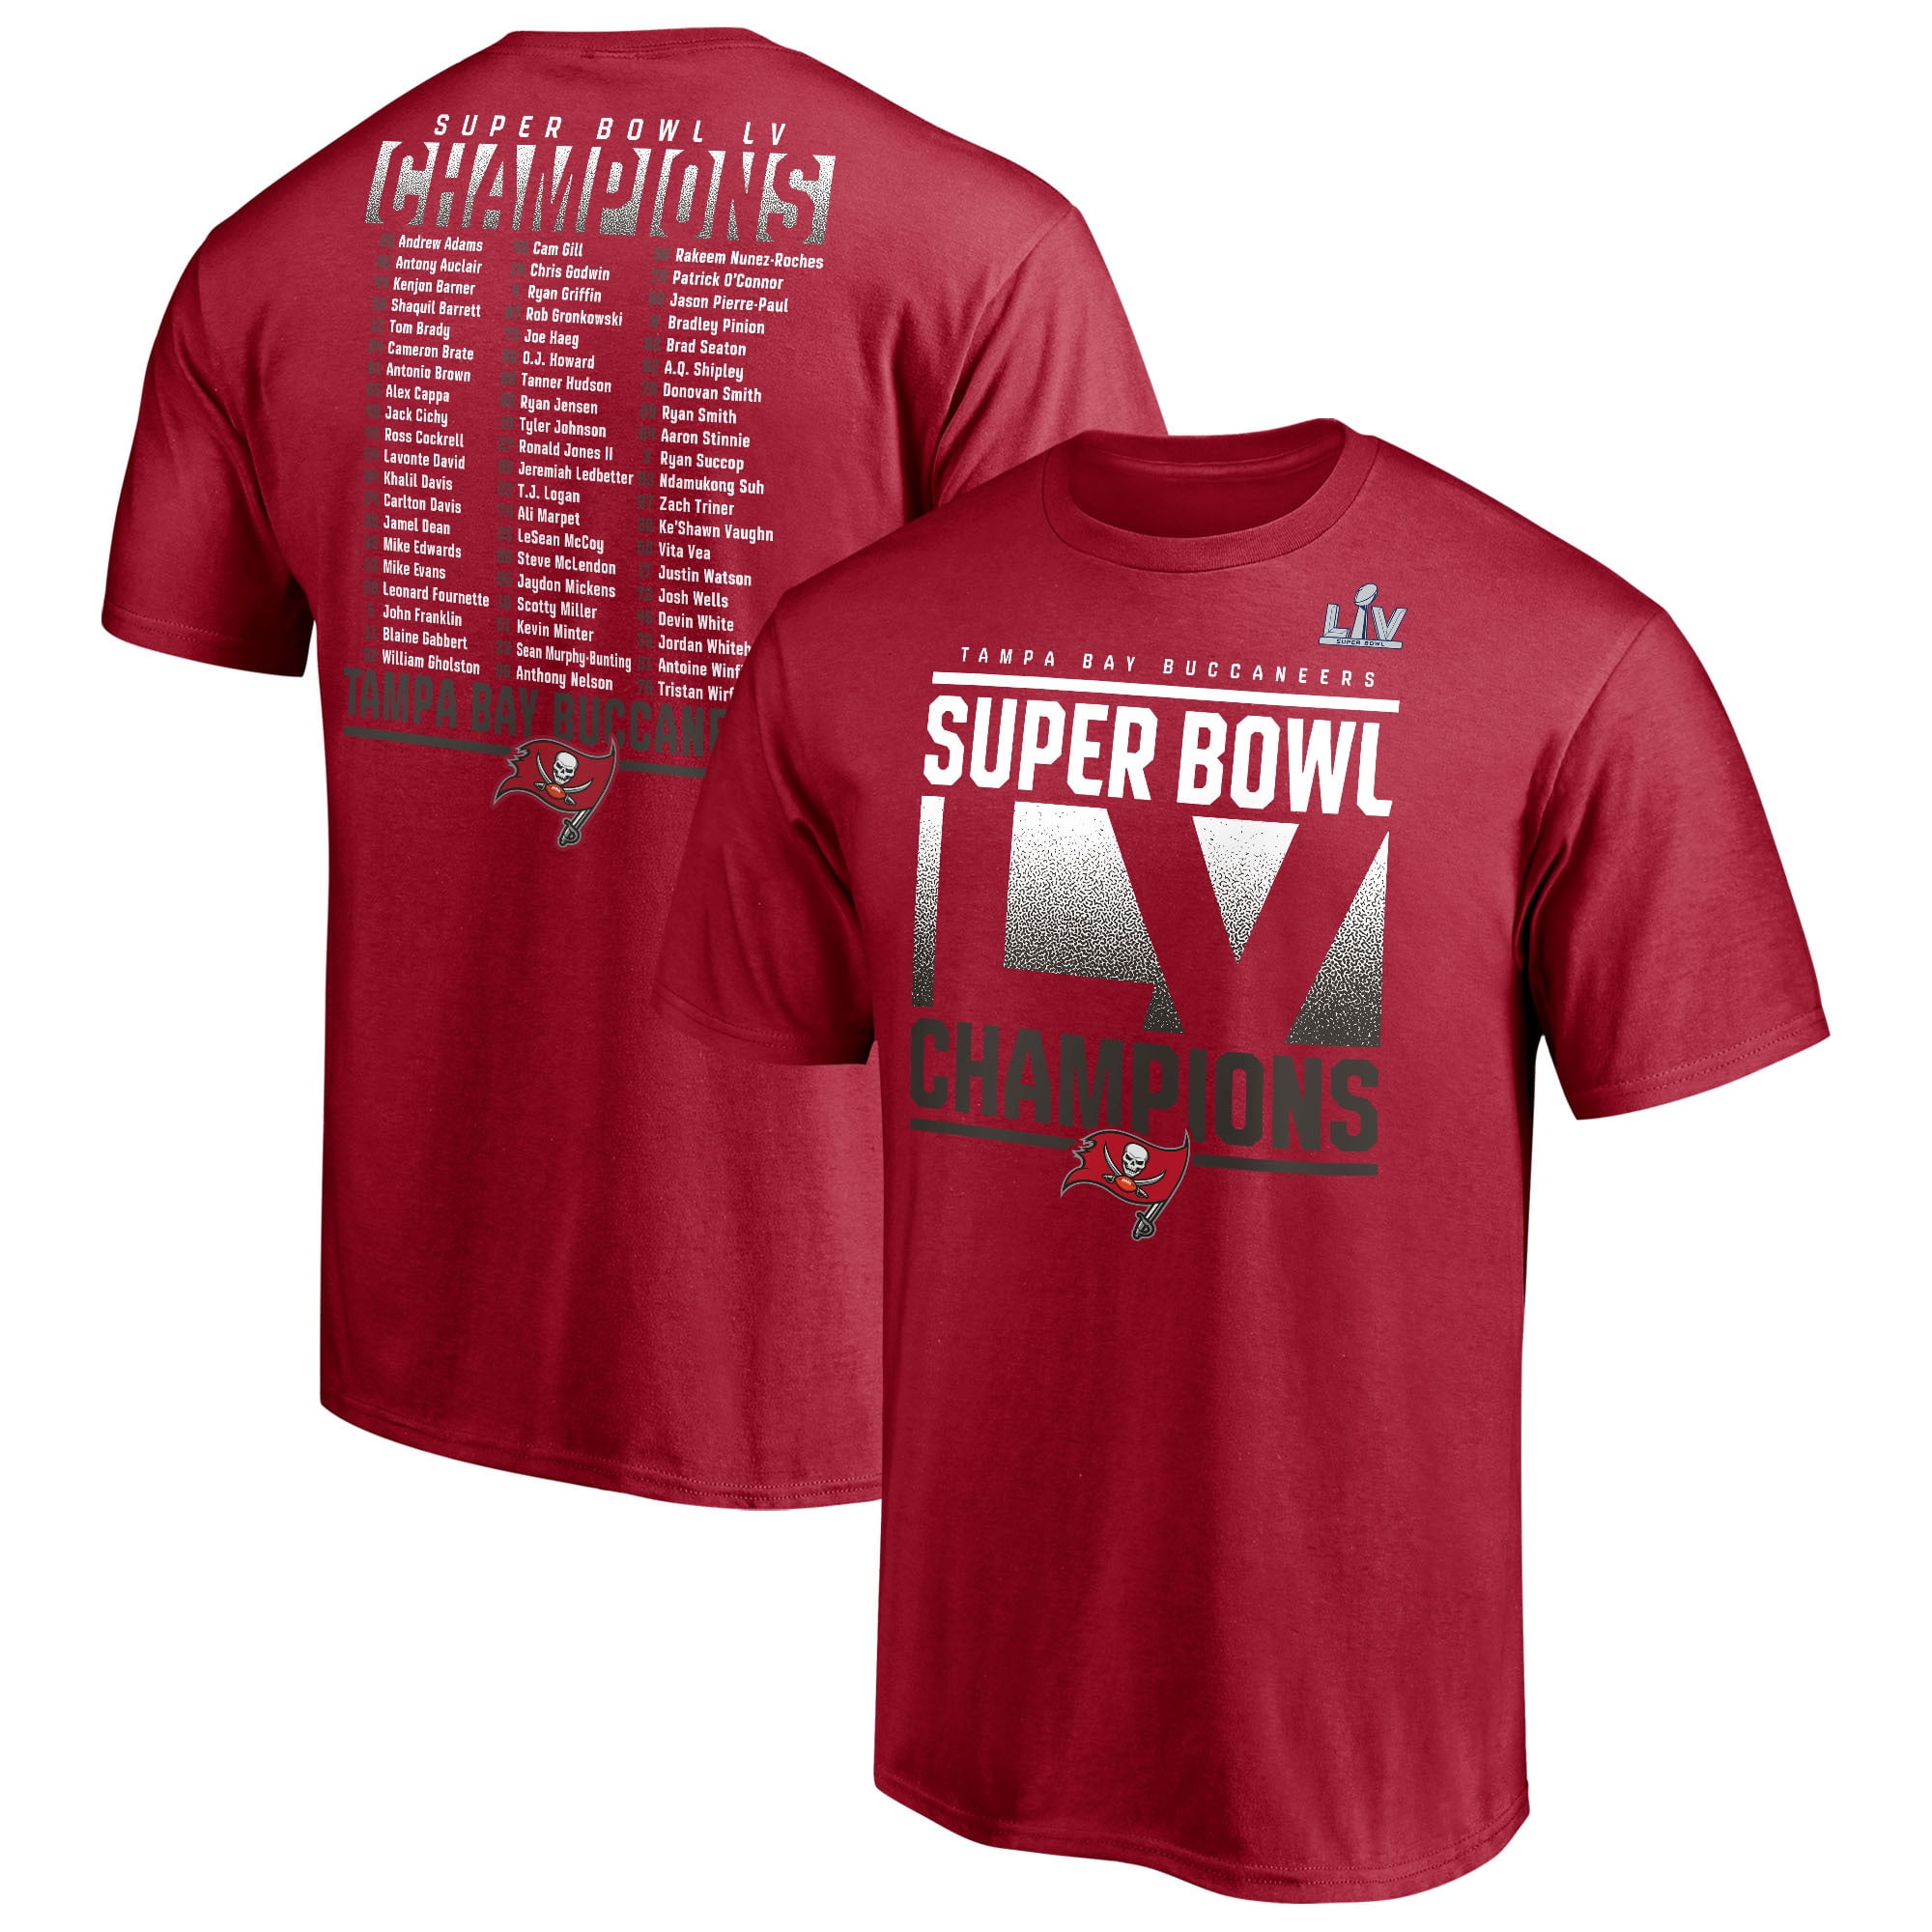 Men's Fanatics Branded Red Tampa Bay Buccaneers Super Bowl LV